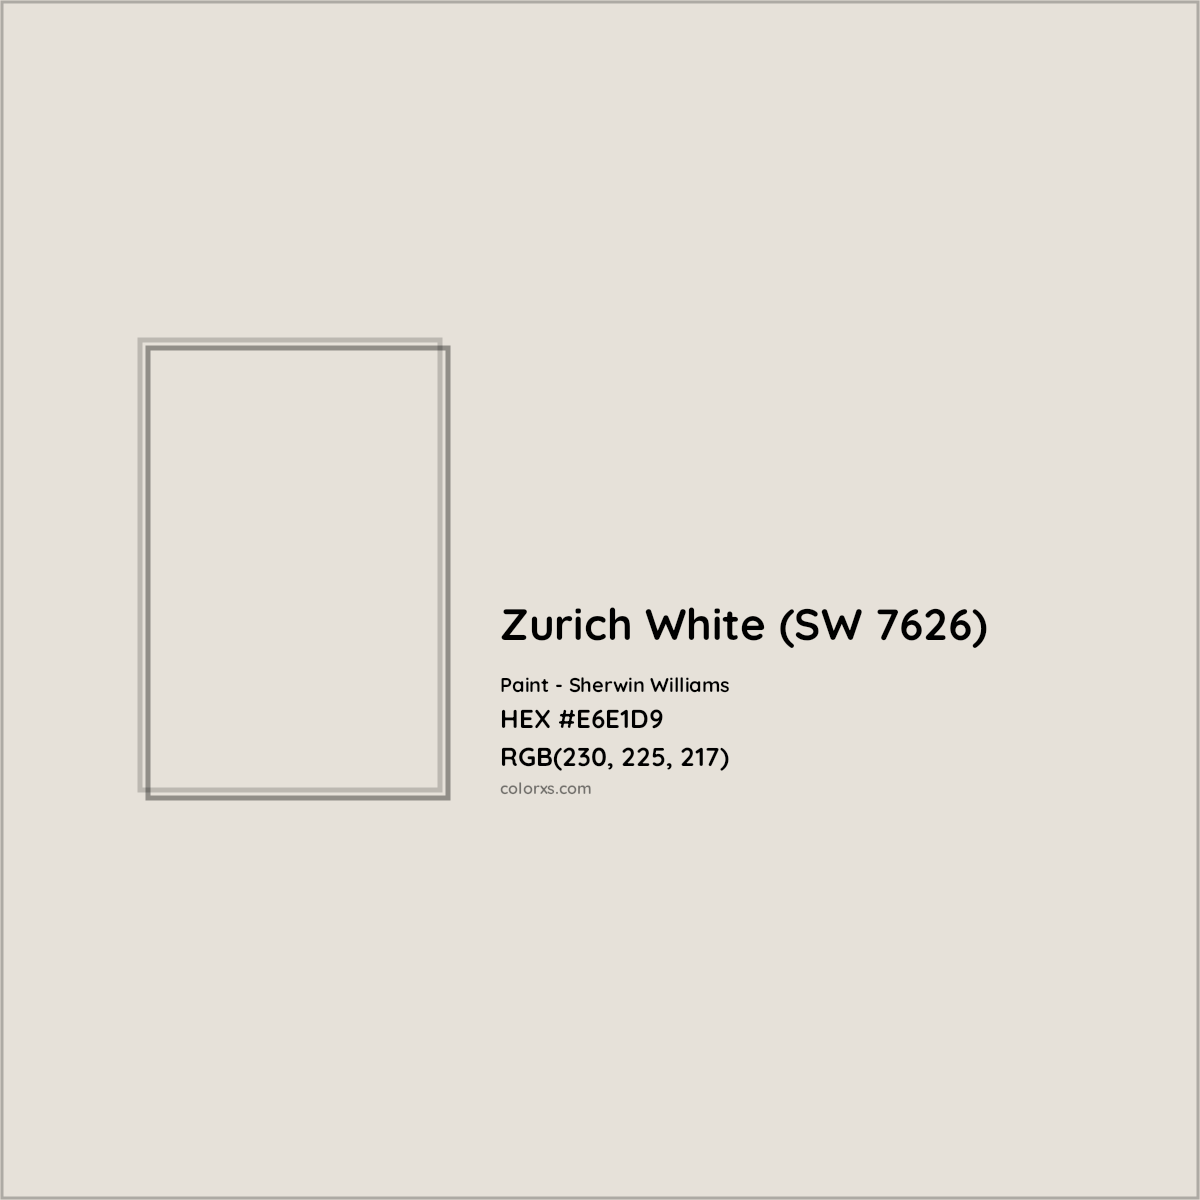 HEX #E6E1D9 Zurich White (SW 7626) Paint Sherwin Williams - Color Code